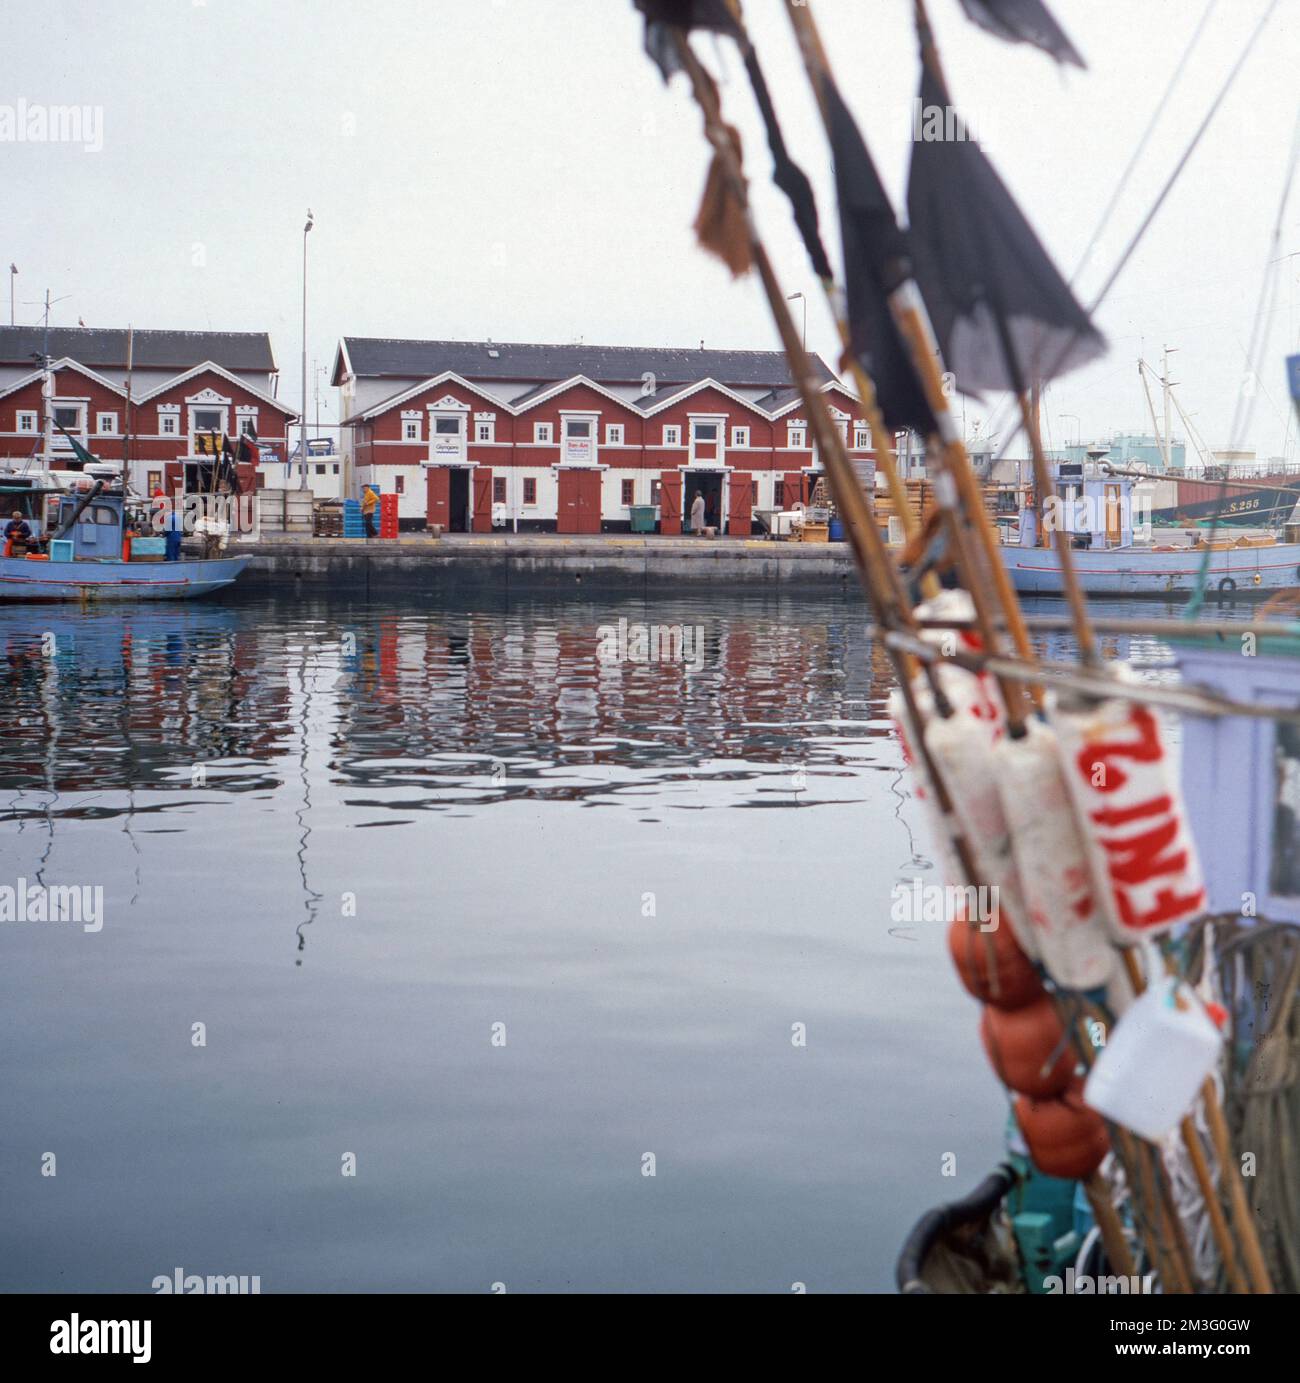 Lagerhäuser im Fischereihafen von Frederikshavn, Dänemark um 1987. Magazzini al porto di pescatori di Frederikshavn, Danimarca intorno al 1987. Foto Stock